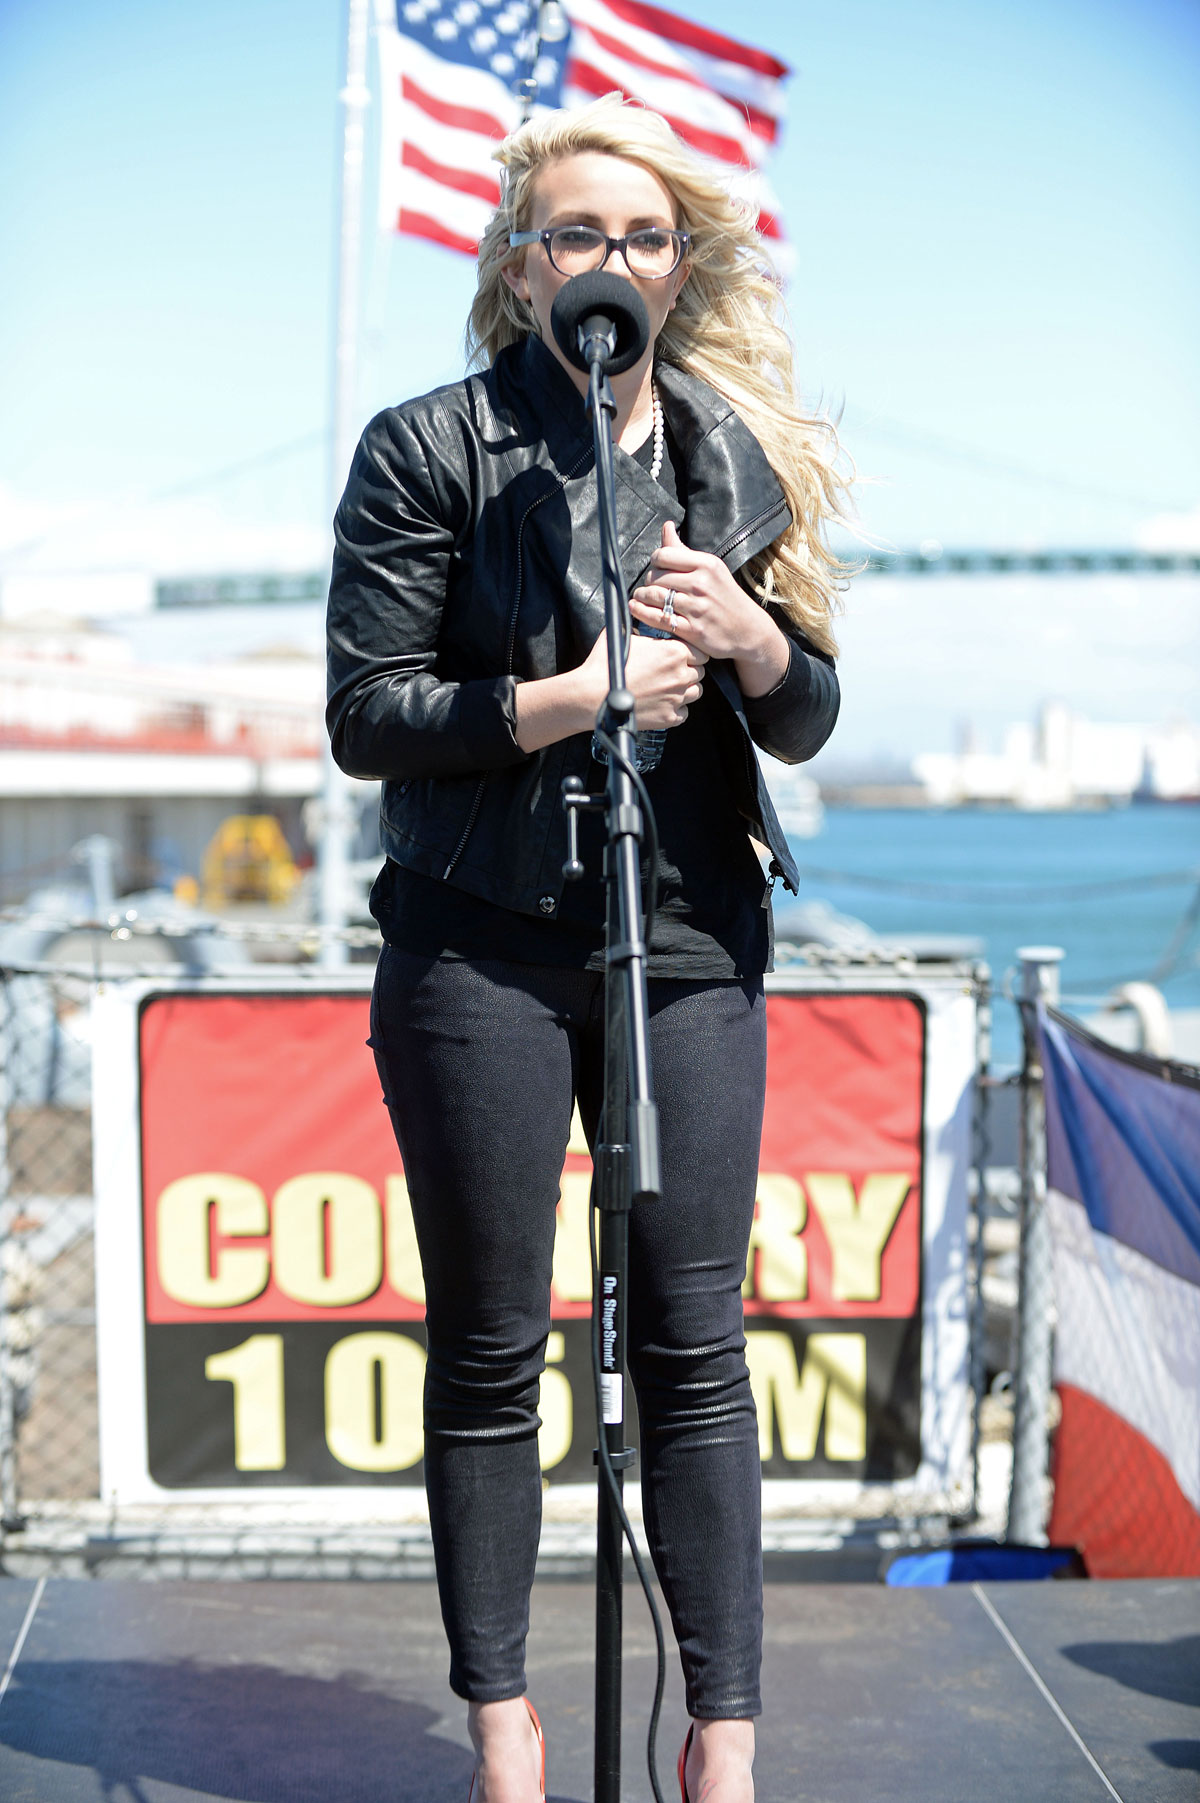 Jamie Lynn Spears performs at a concert on USS Iowa San Pedro